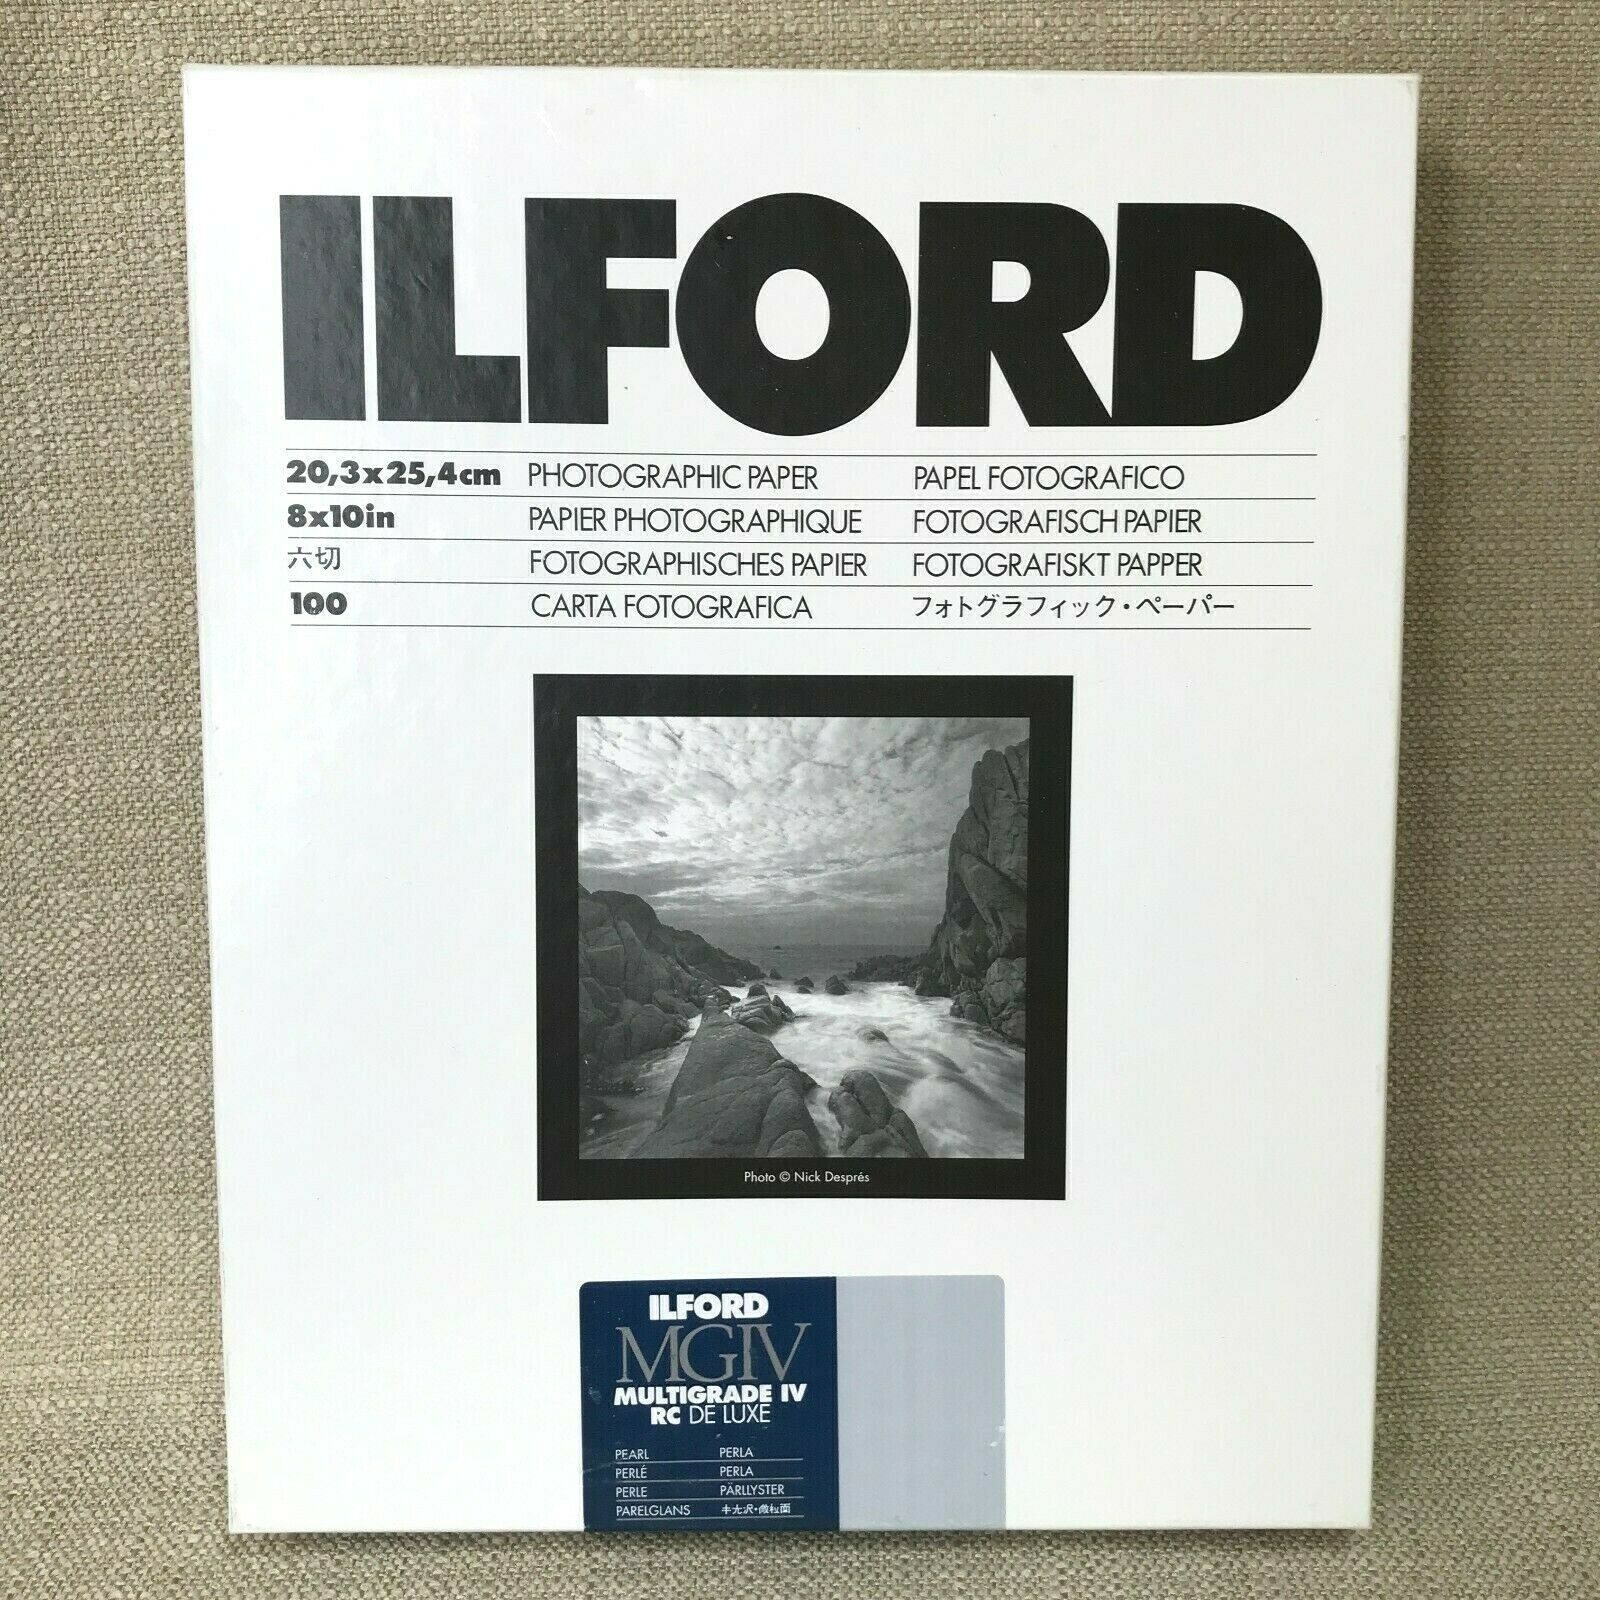 Ilford B&w Photographic Paper 8x10 Multigrade Iv Pearl Rc Deluxe